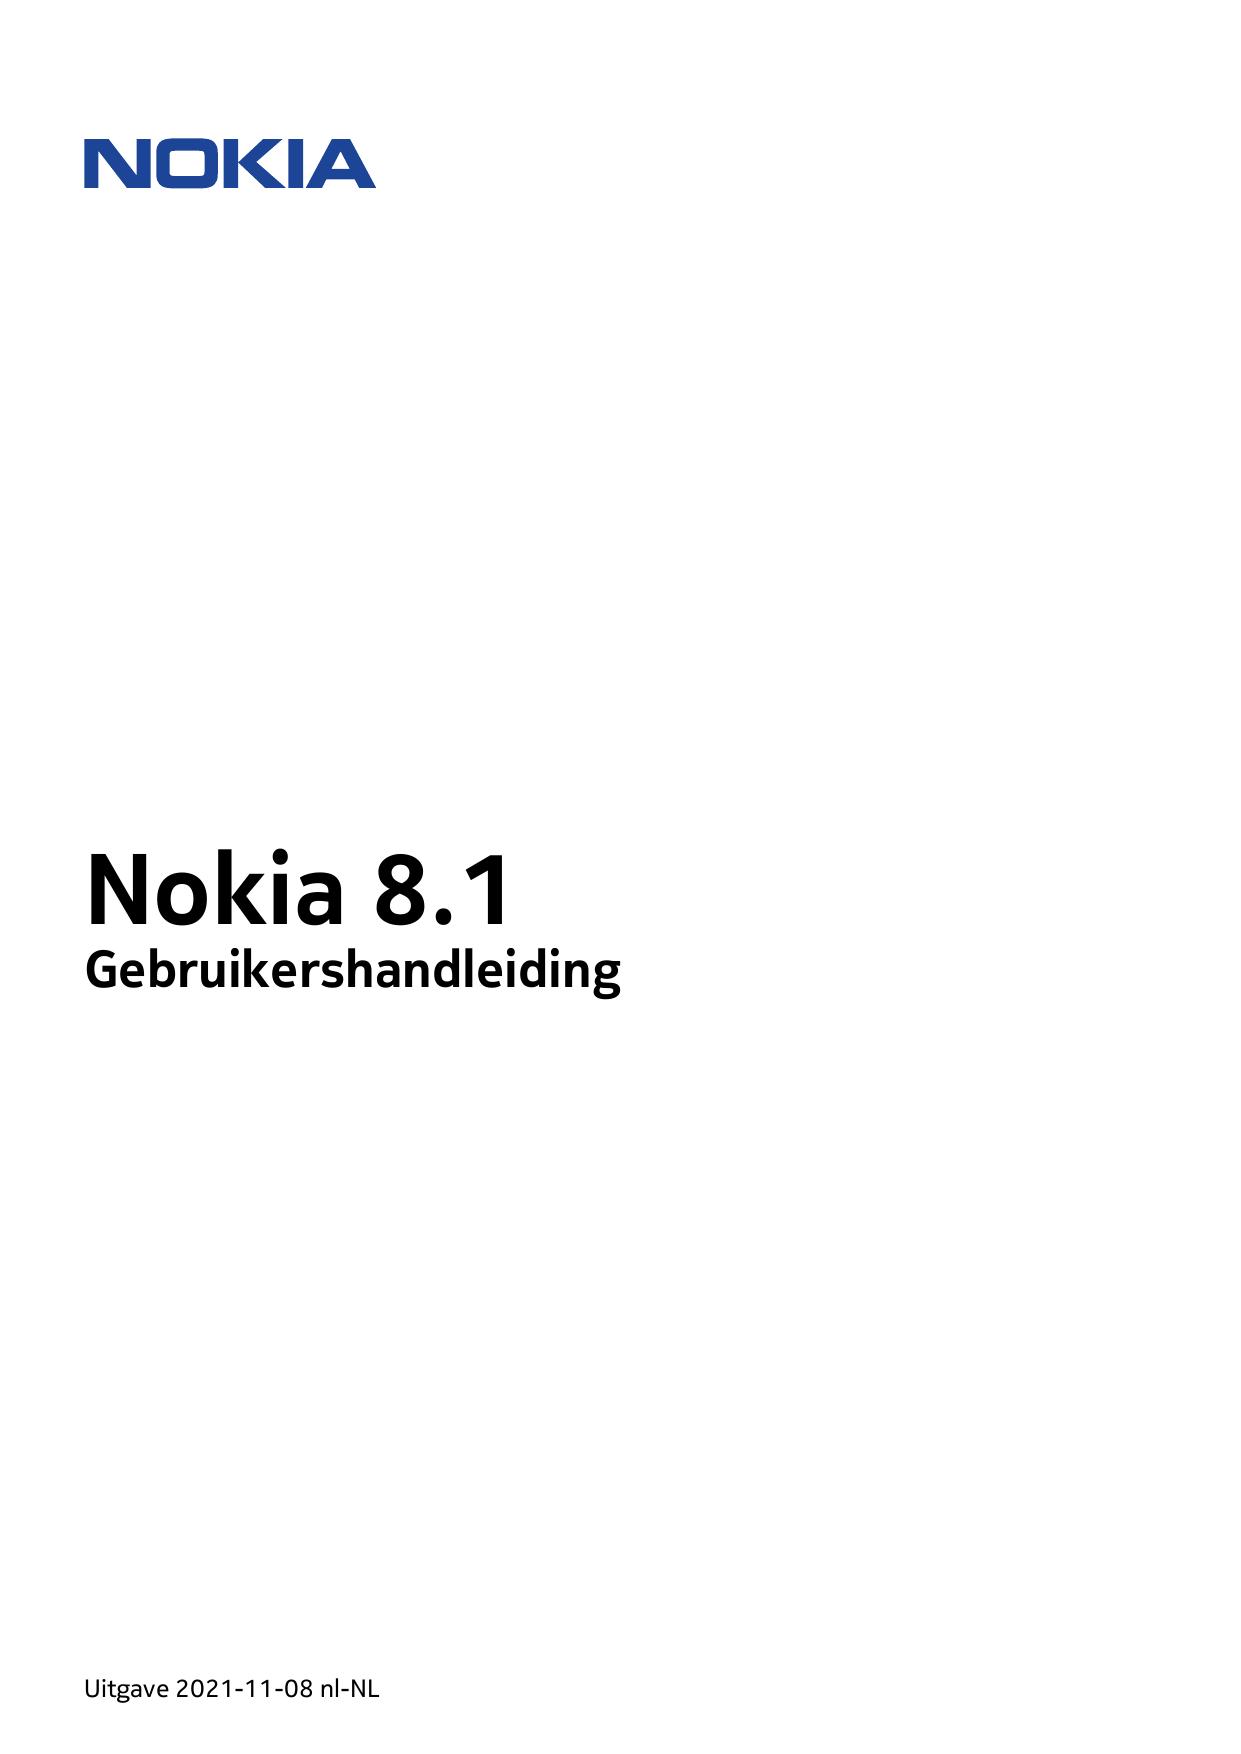 Nokia 8.1GebruikershandleidingUitgave 2021-11-08 nl-NL